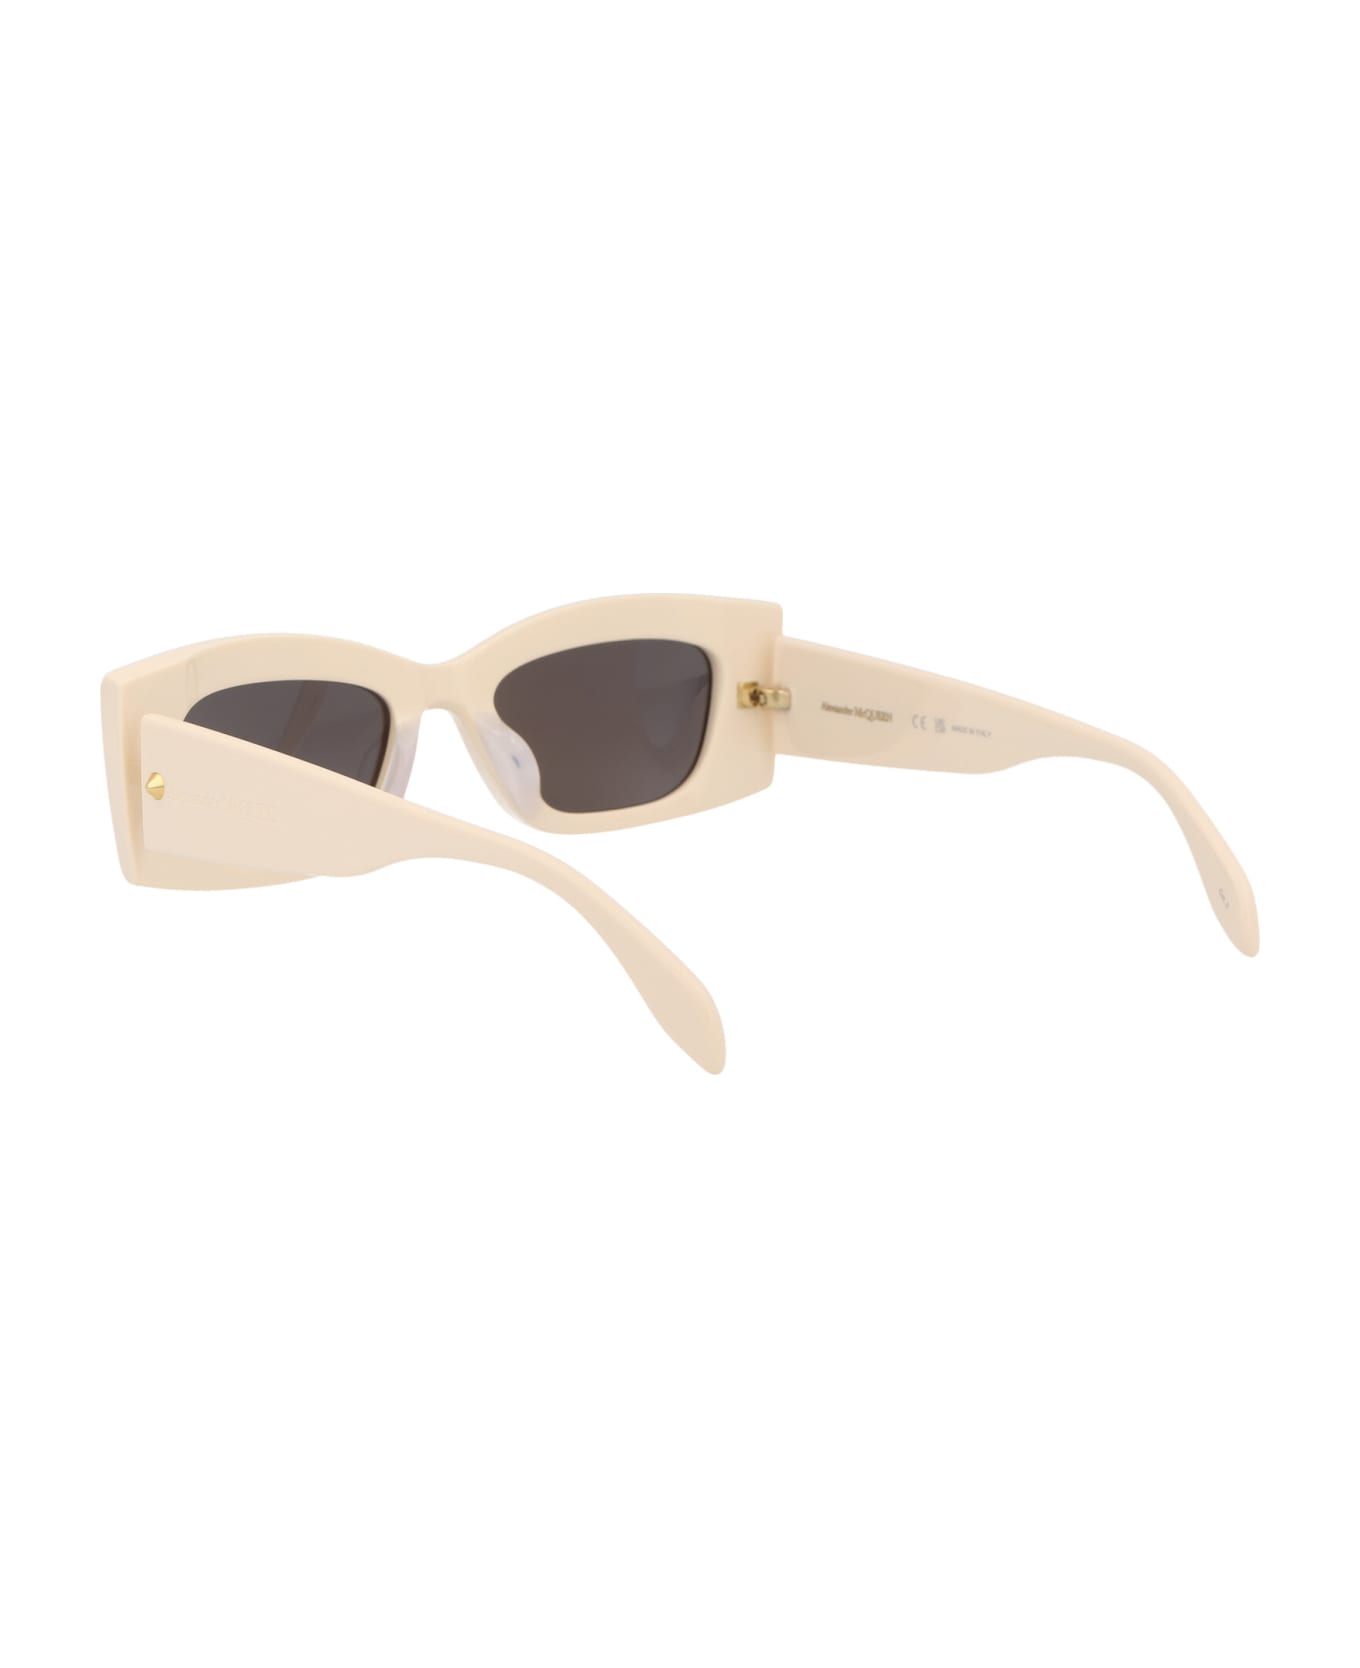 Alexander McQueen Eyewear Am0426s Sunglasses - 005 IVORY IVORY GREY